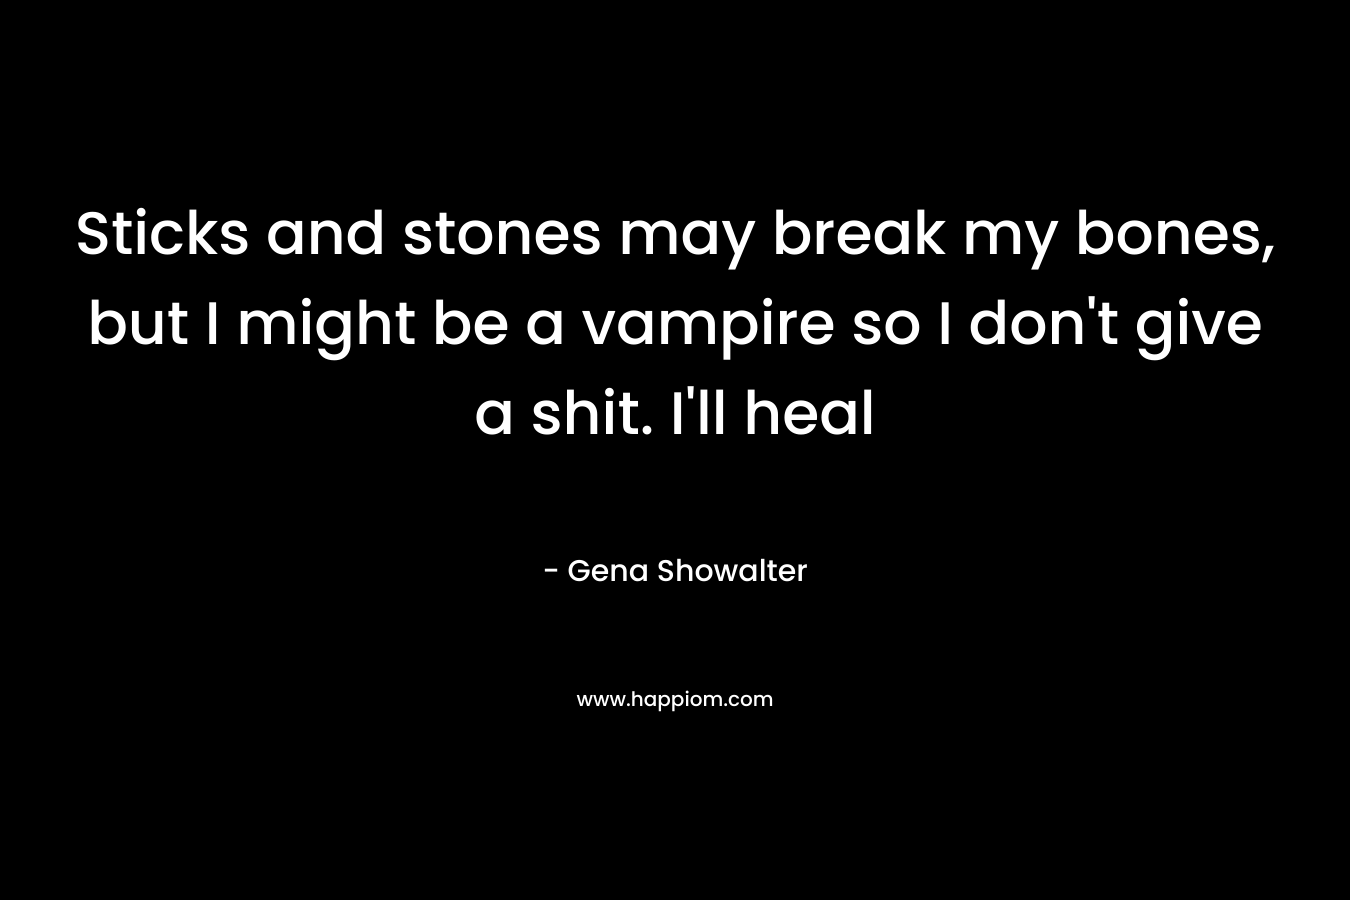 Sticks and stones may break my bones, but I might be a vampire so I don't give a shit. I'll heal